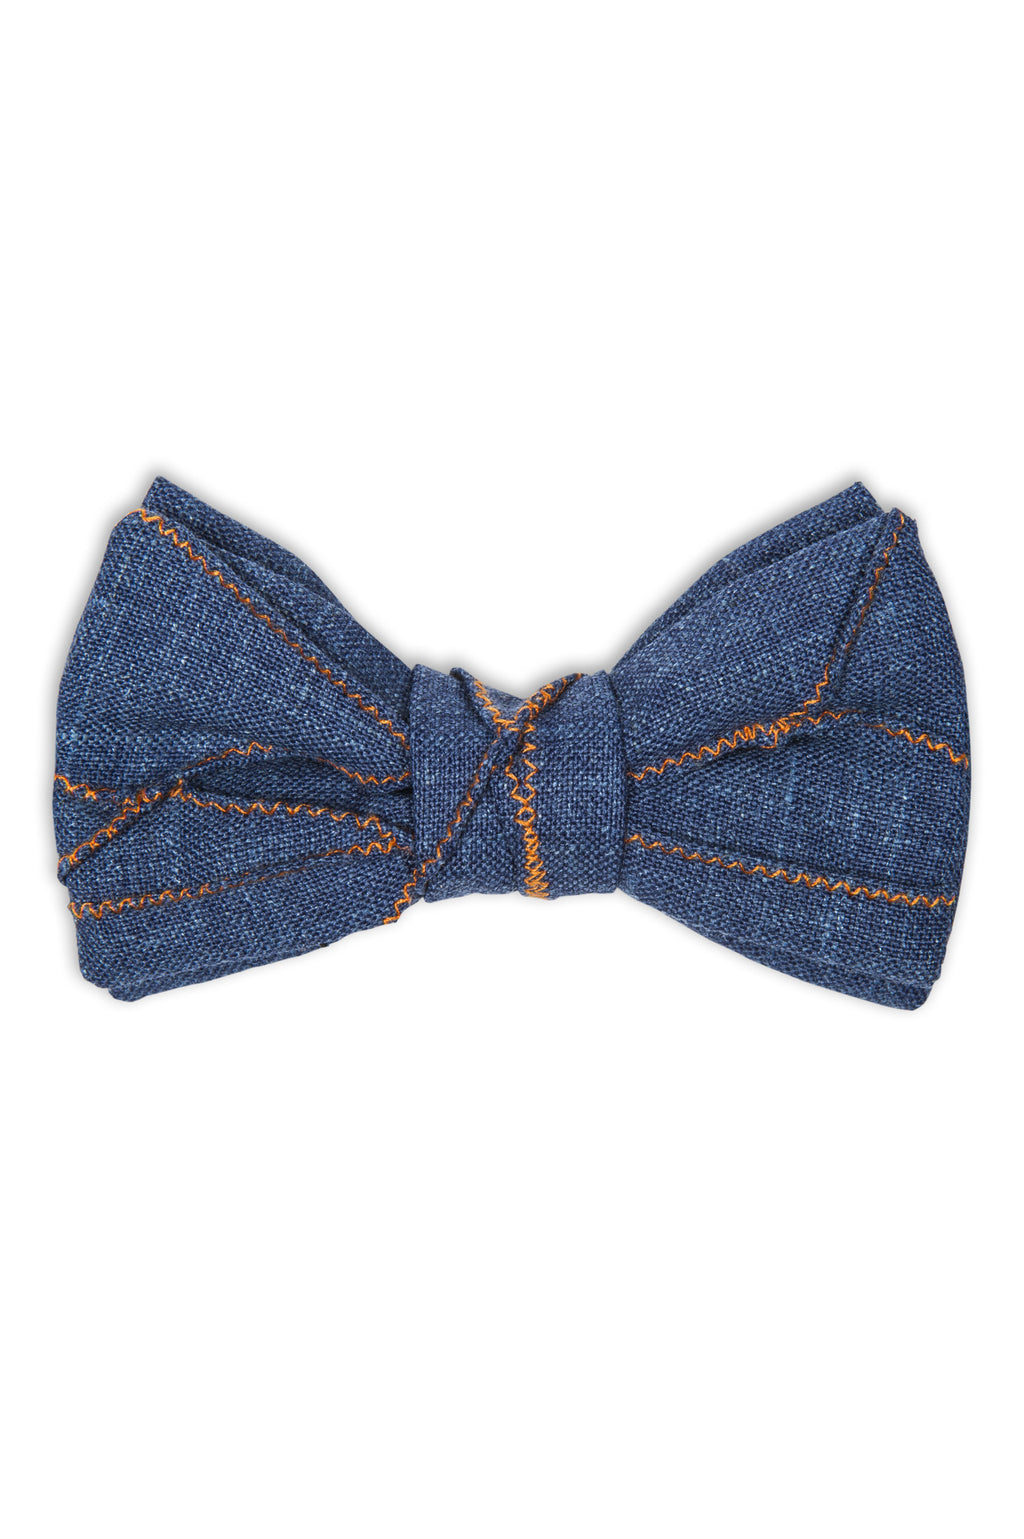 Handmade grey wool bow tie with apparent stitching - Noeud papillon en laine avec coutures inversées apparentes